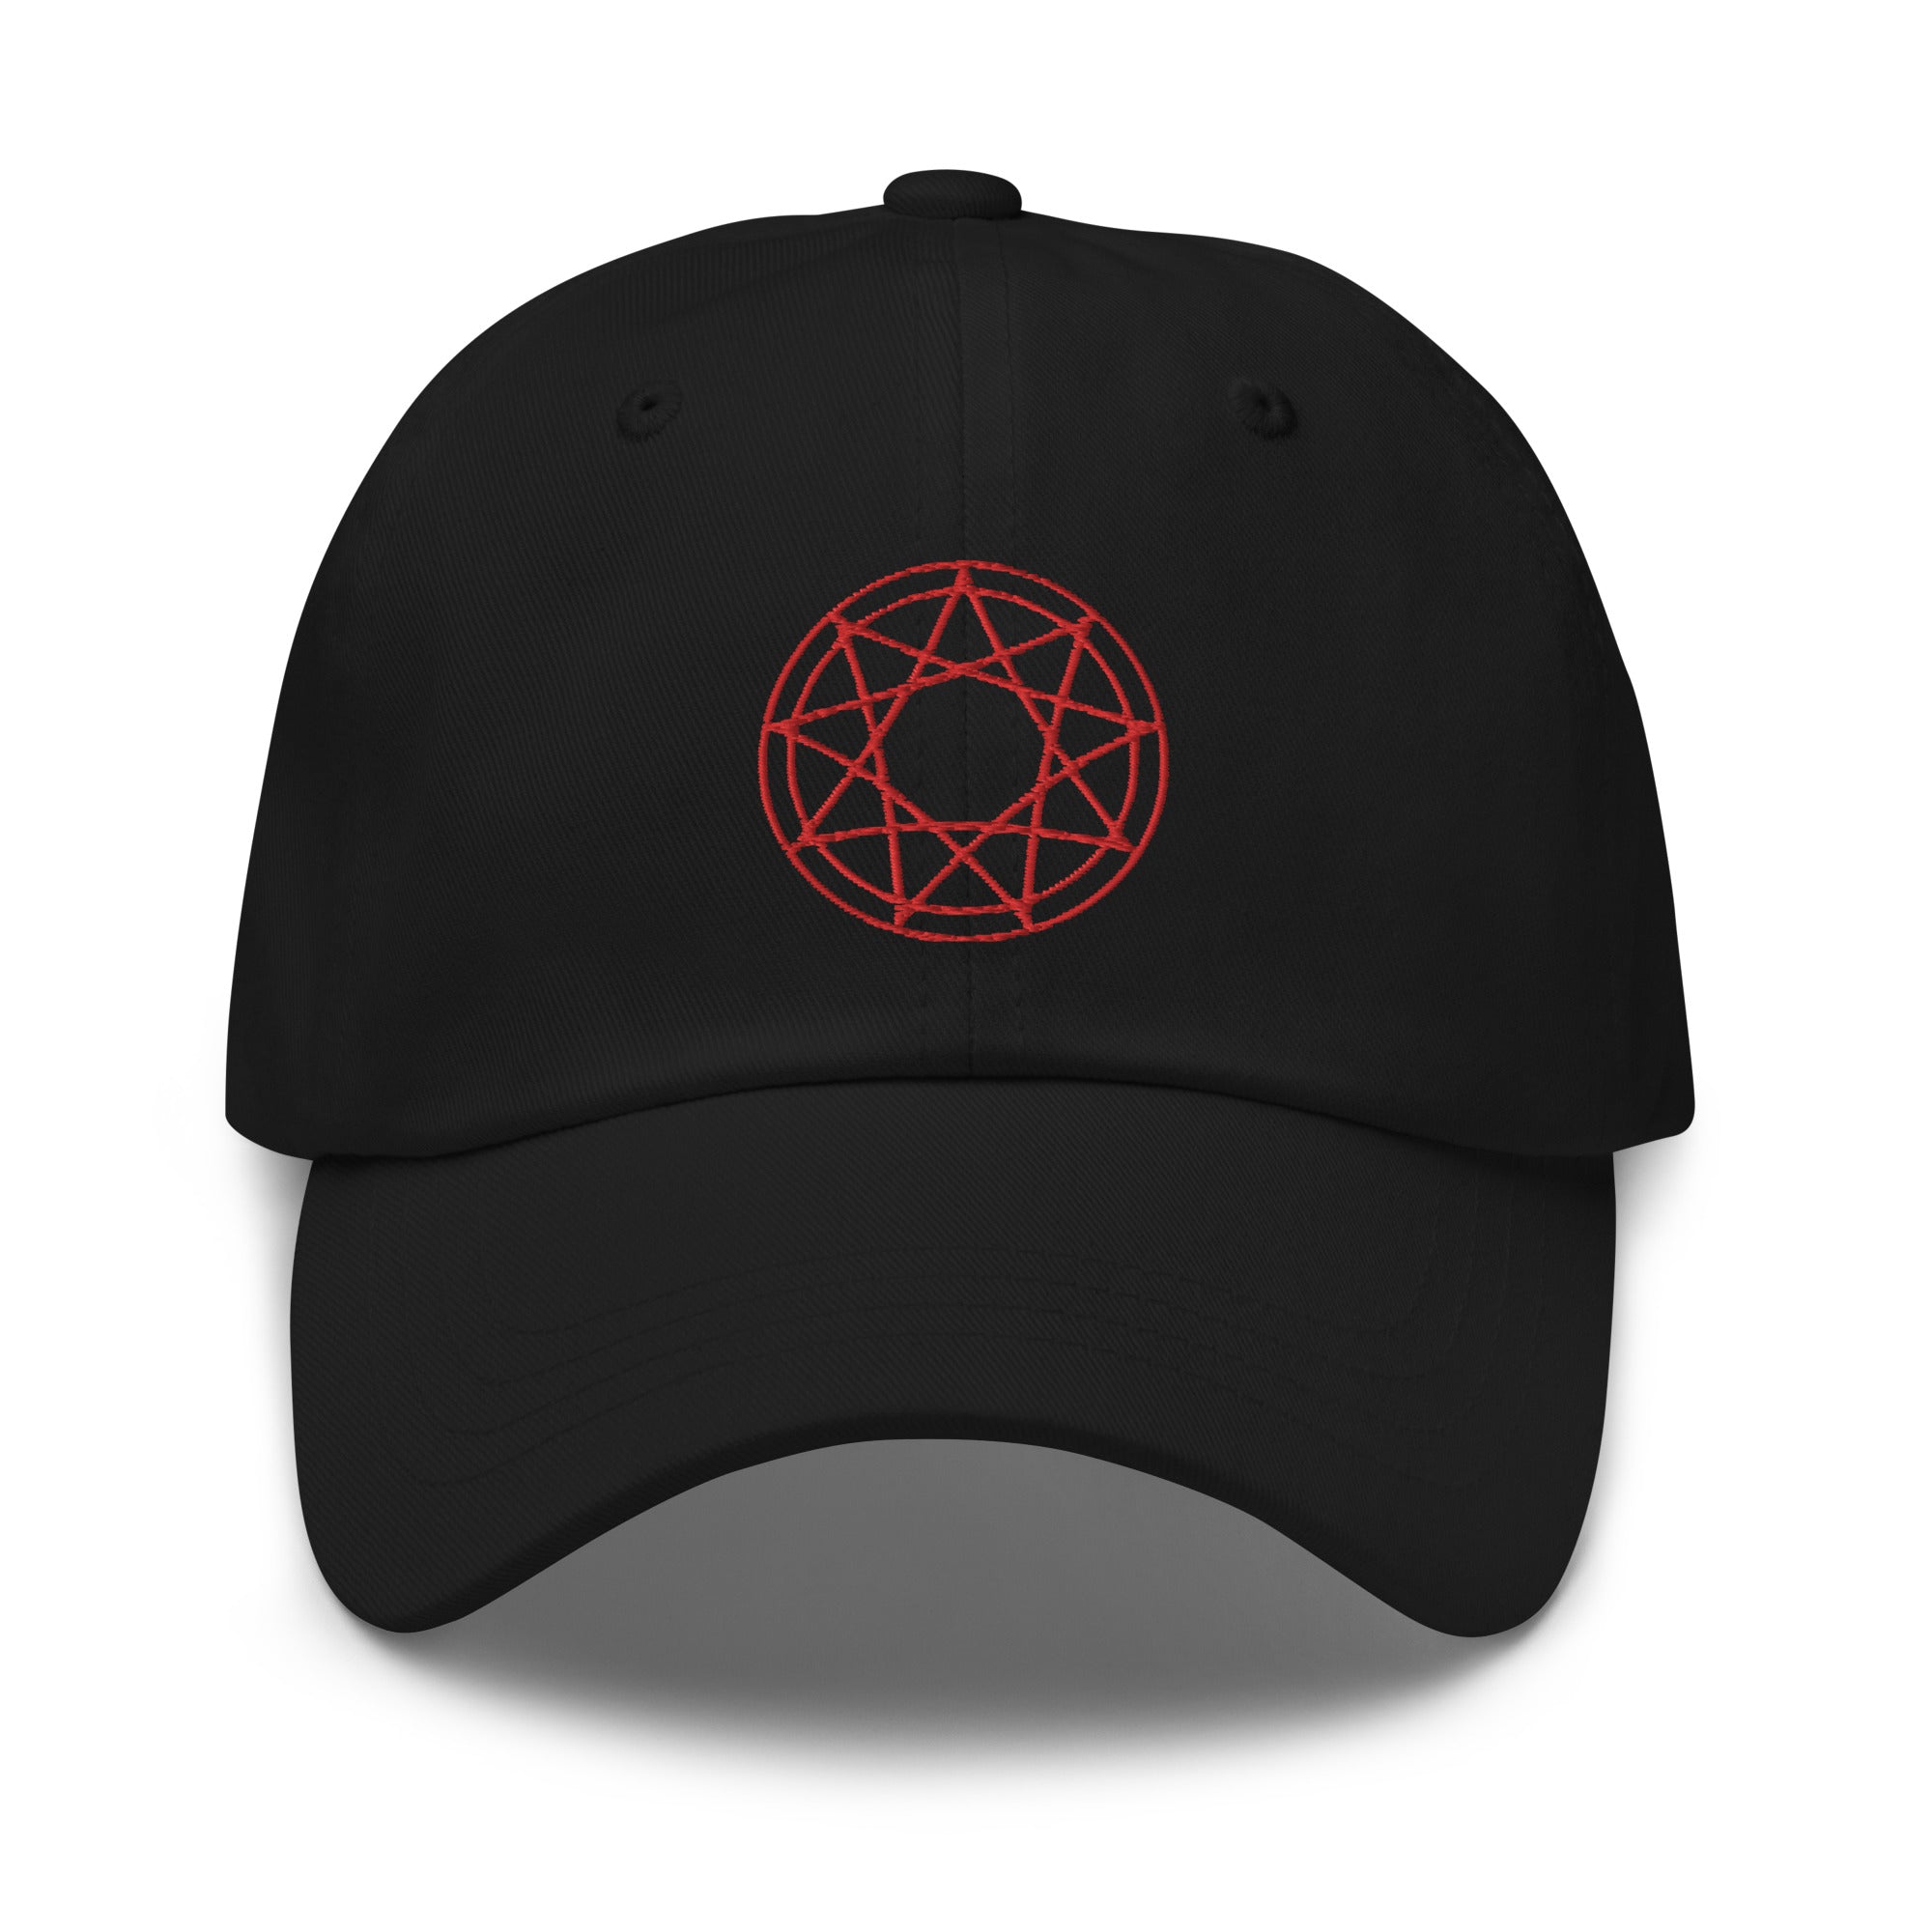 9 Point Star Pentagram Occult Symbol Embroidered Baseball Cap Slipknot Dad hat Red Thread - Edge of Life Designs